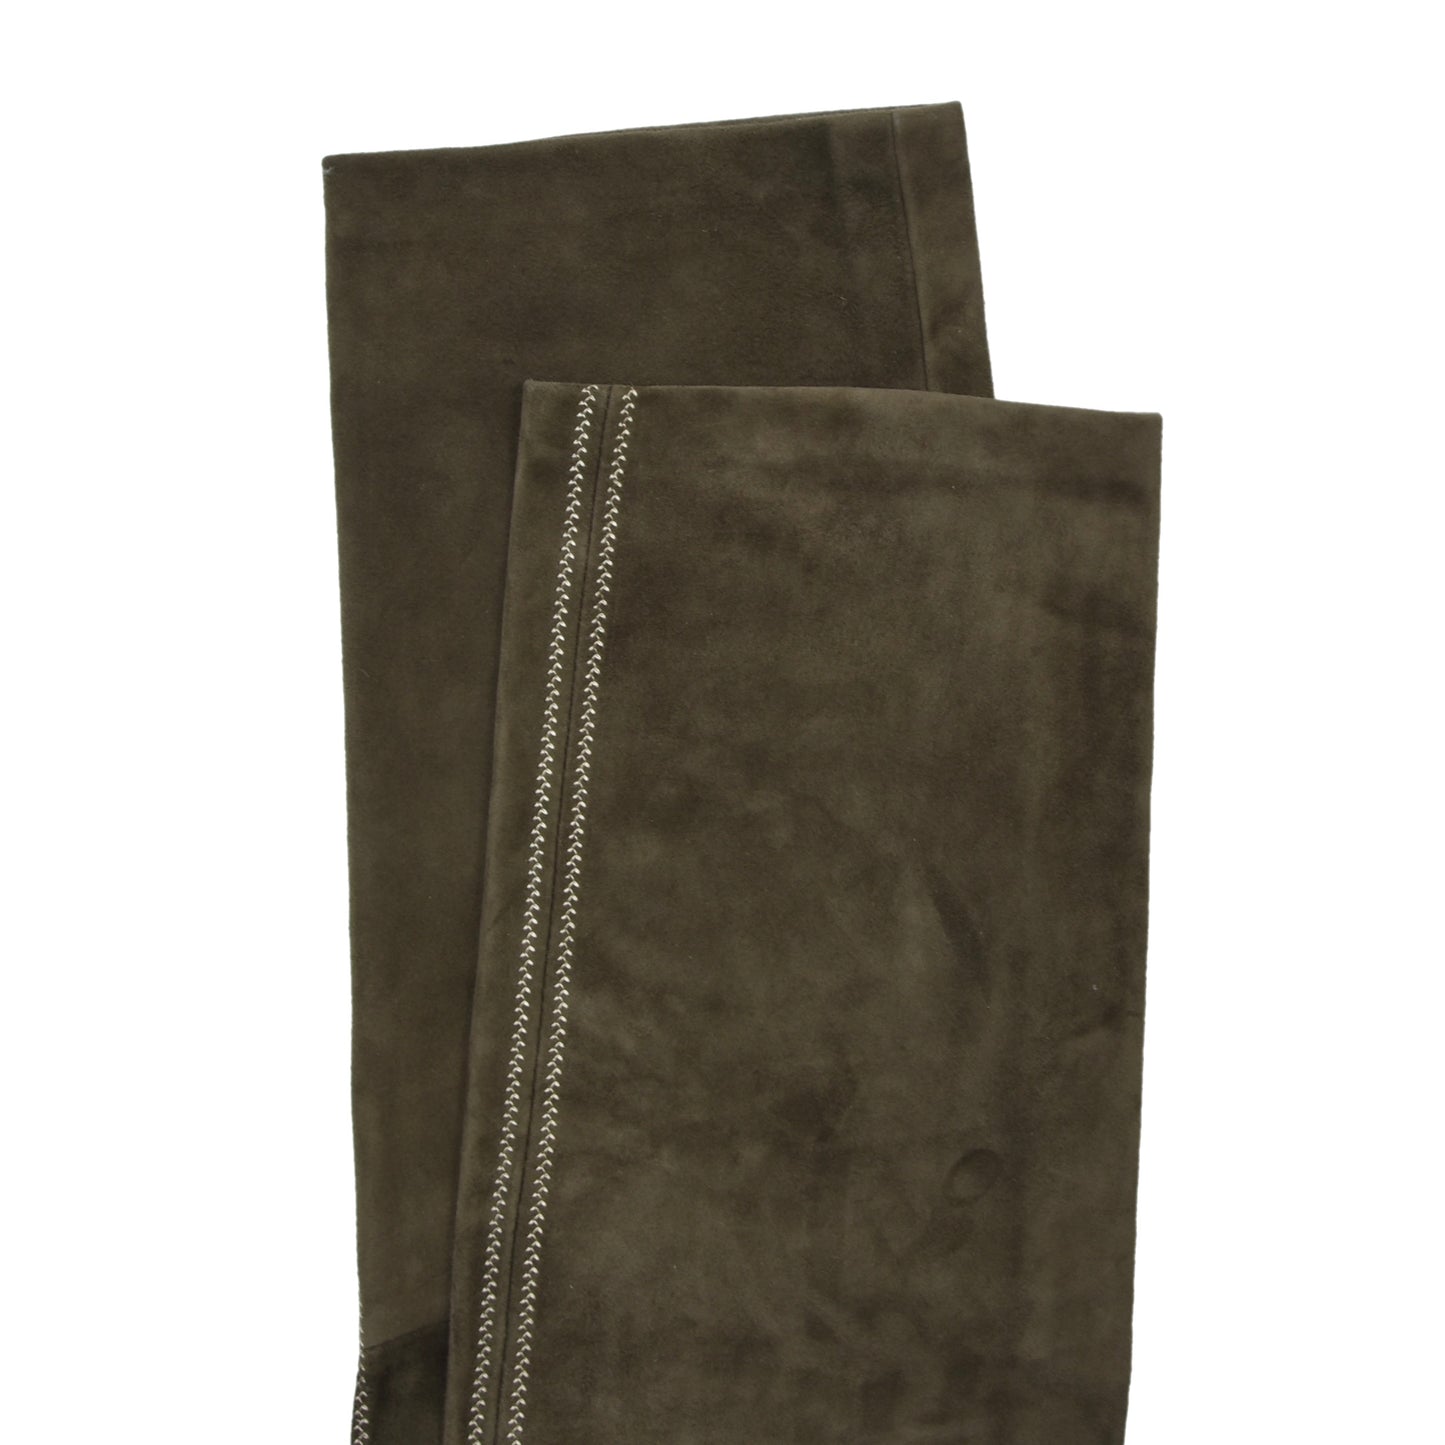 Long Suede Lederhose/Pants ca. 42.5cm - Brown